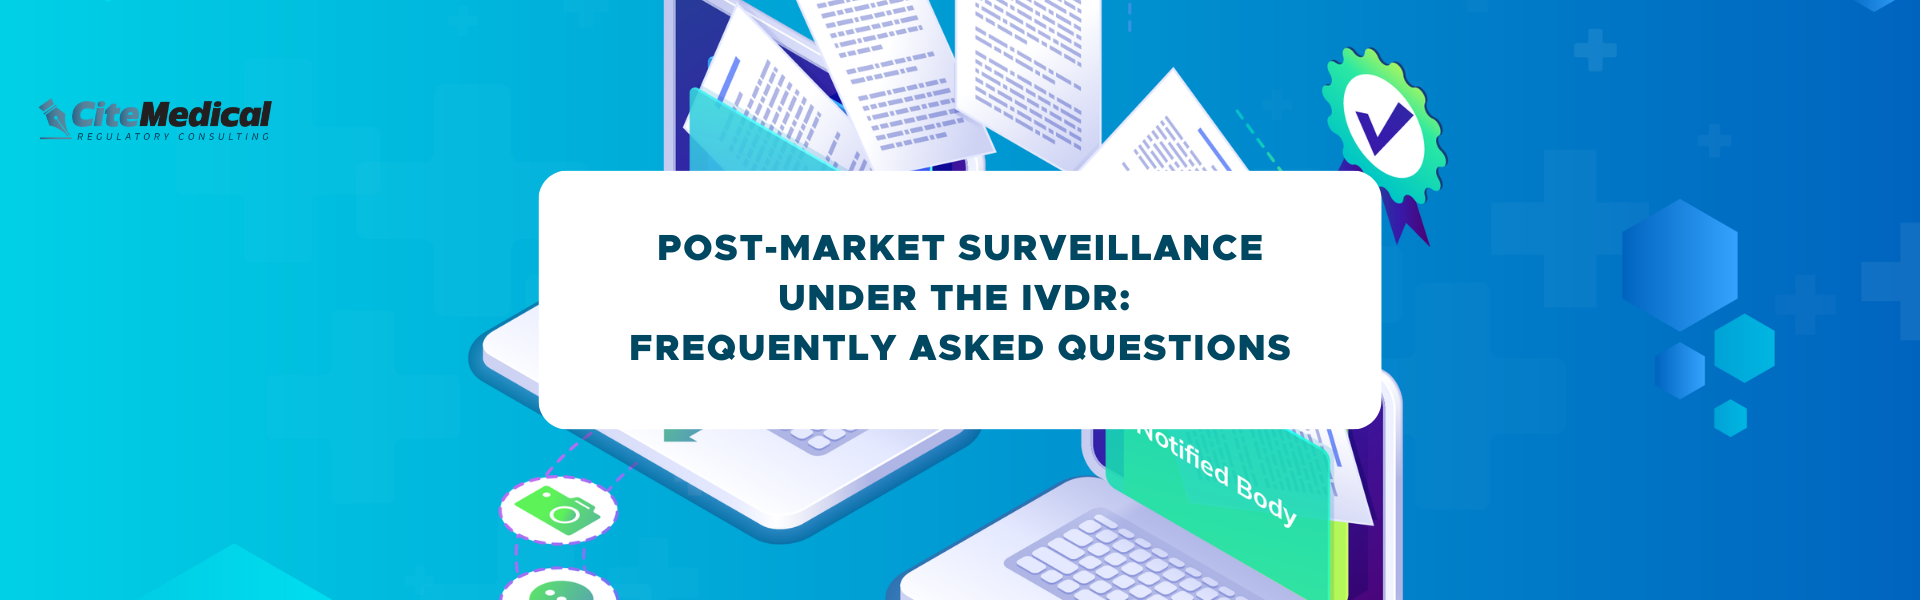 Post-market surveillance under the IVDR